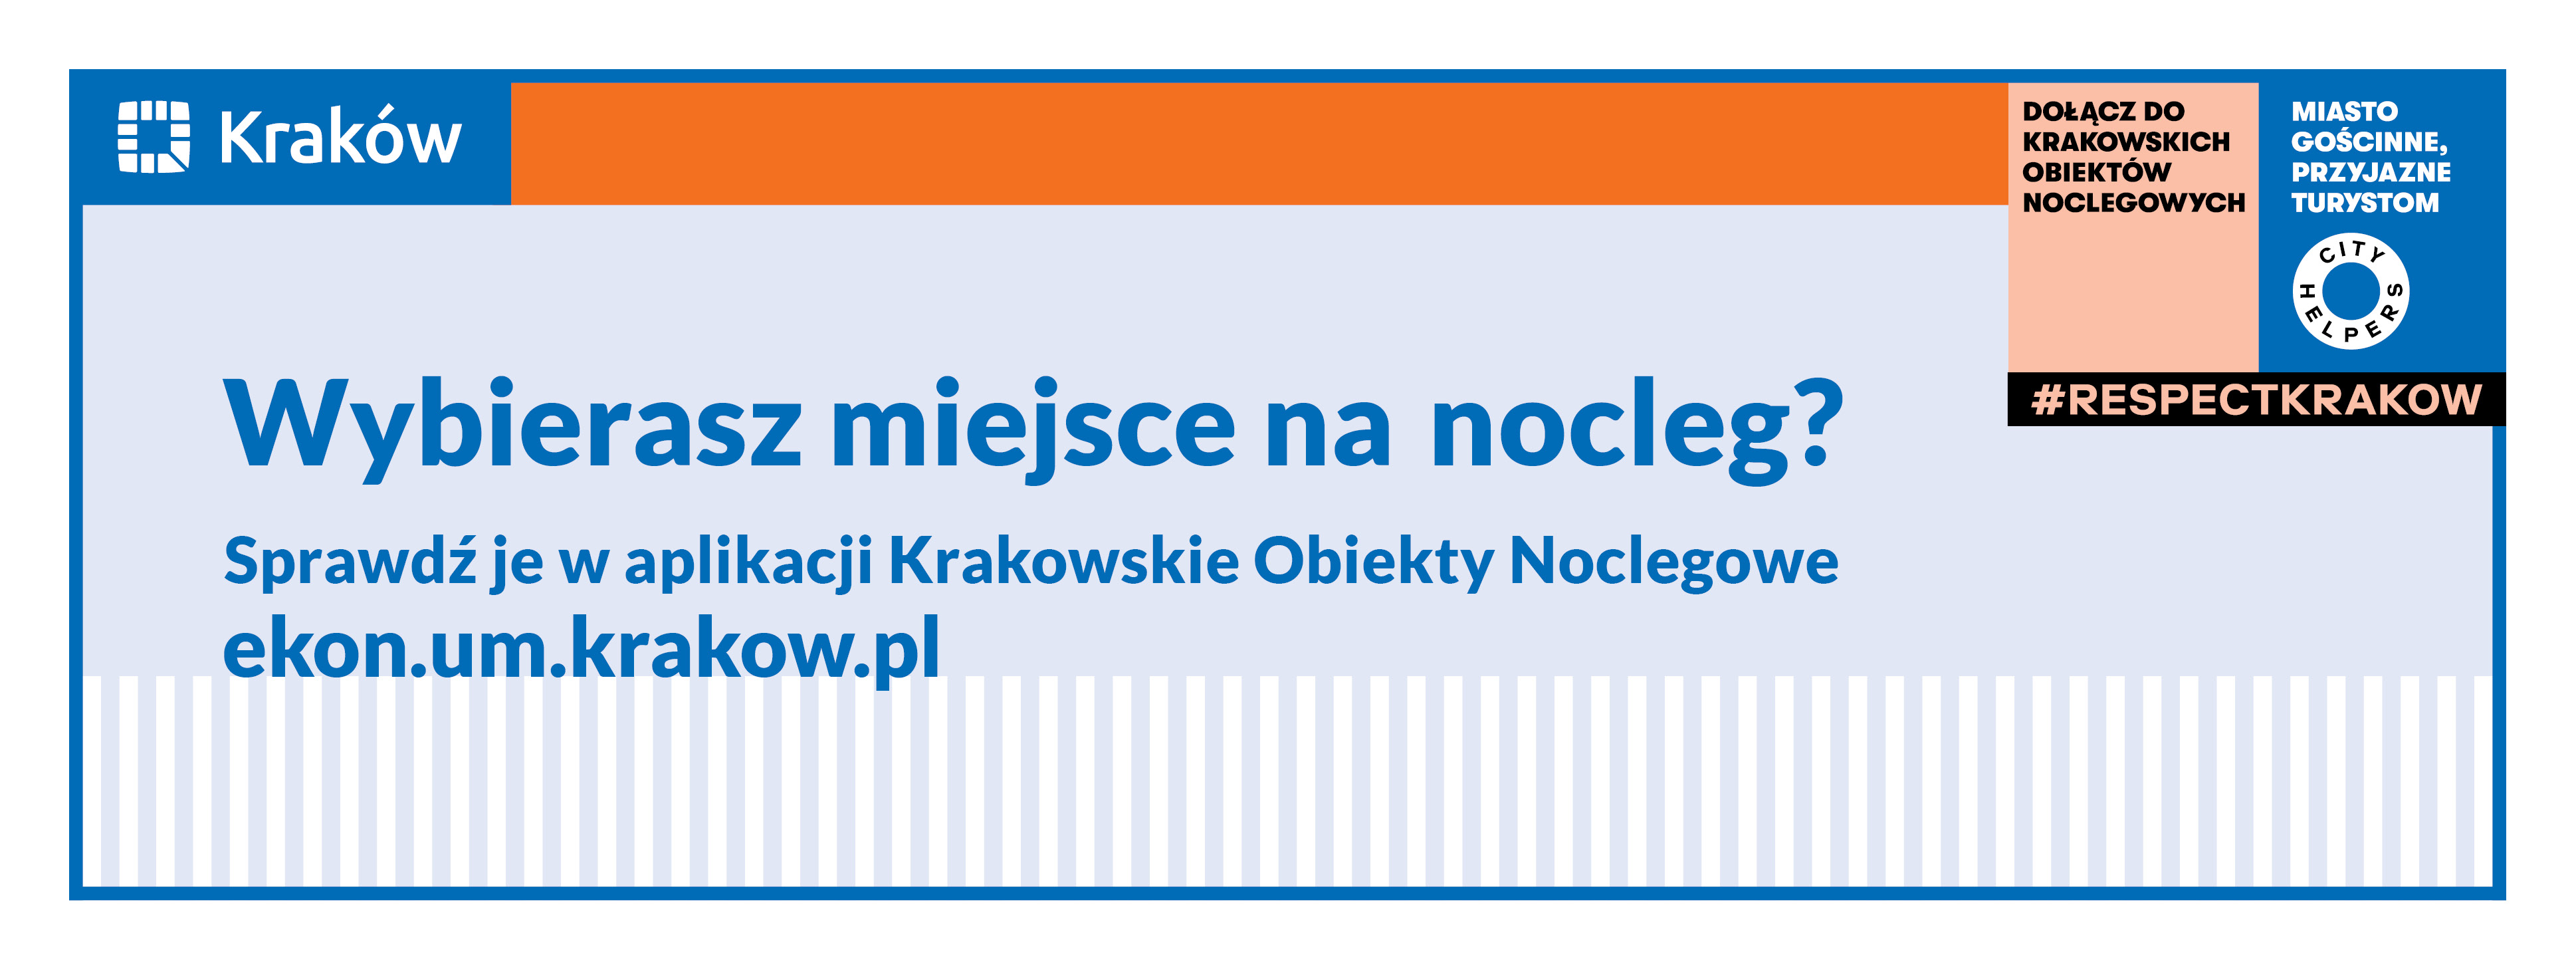 Urząd Miasta Krakowa